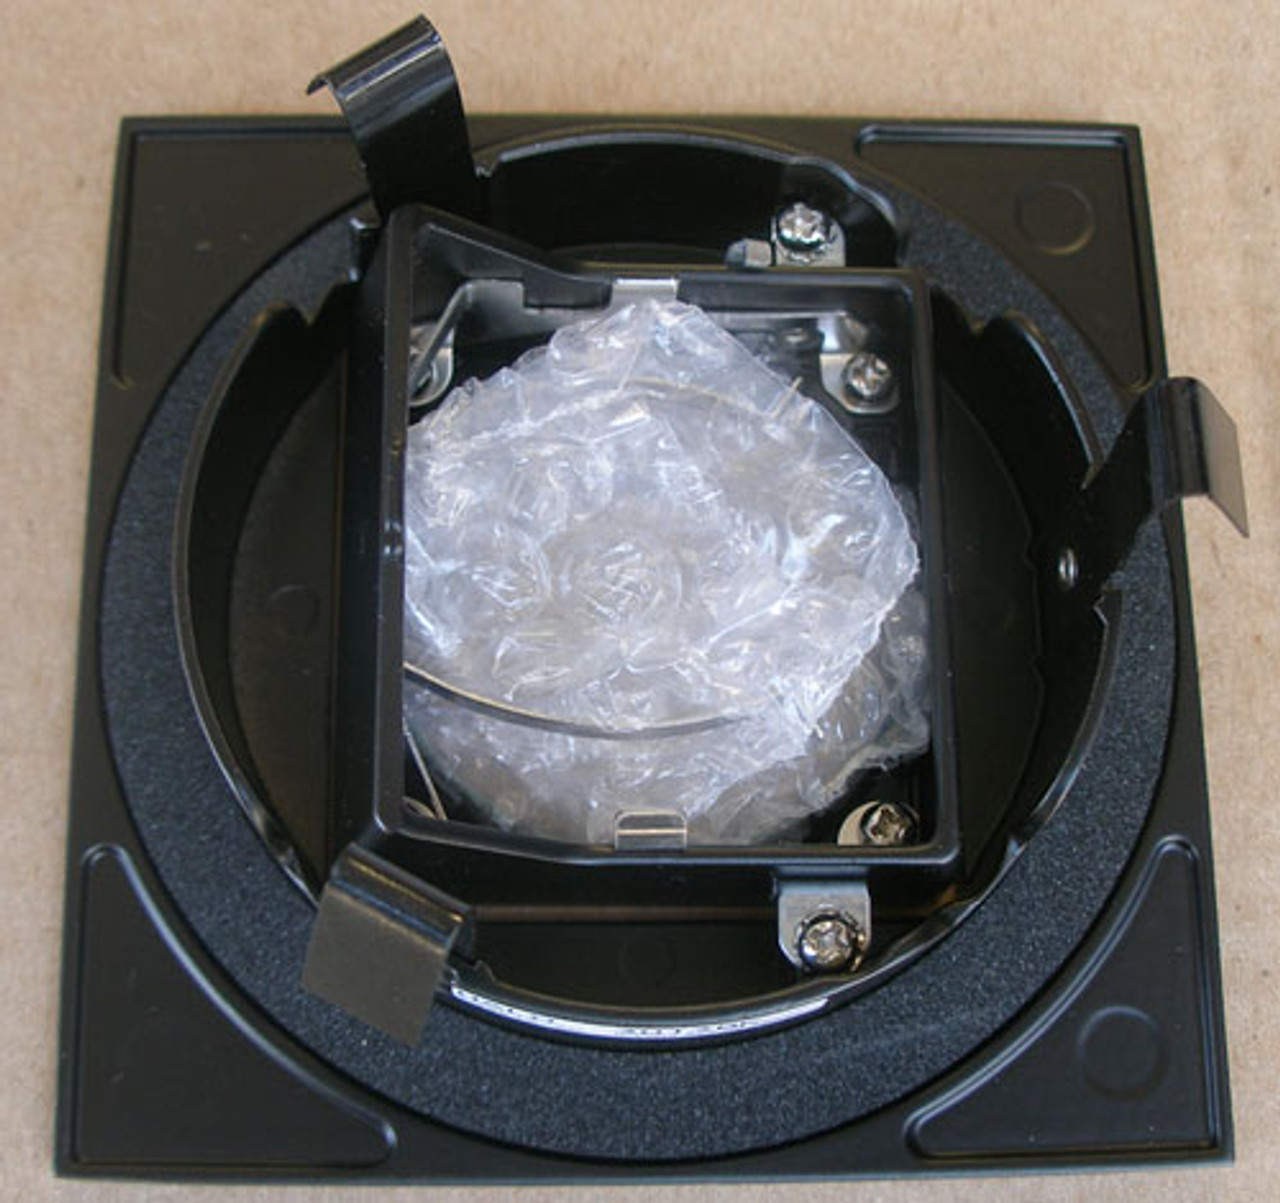 Cooper 3013-BK 3" Low Voltage Housing Die Cast Square Adjustable Gimbal in Black - New